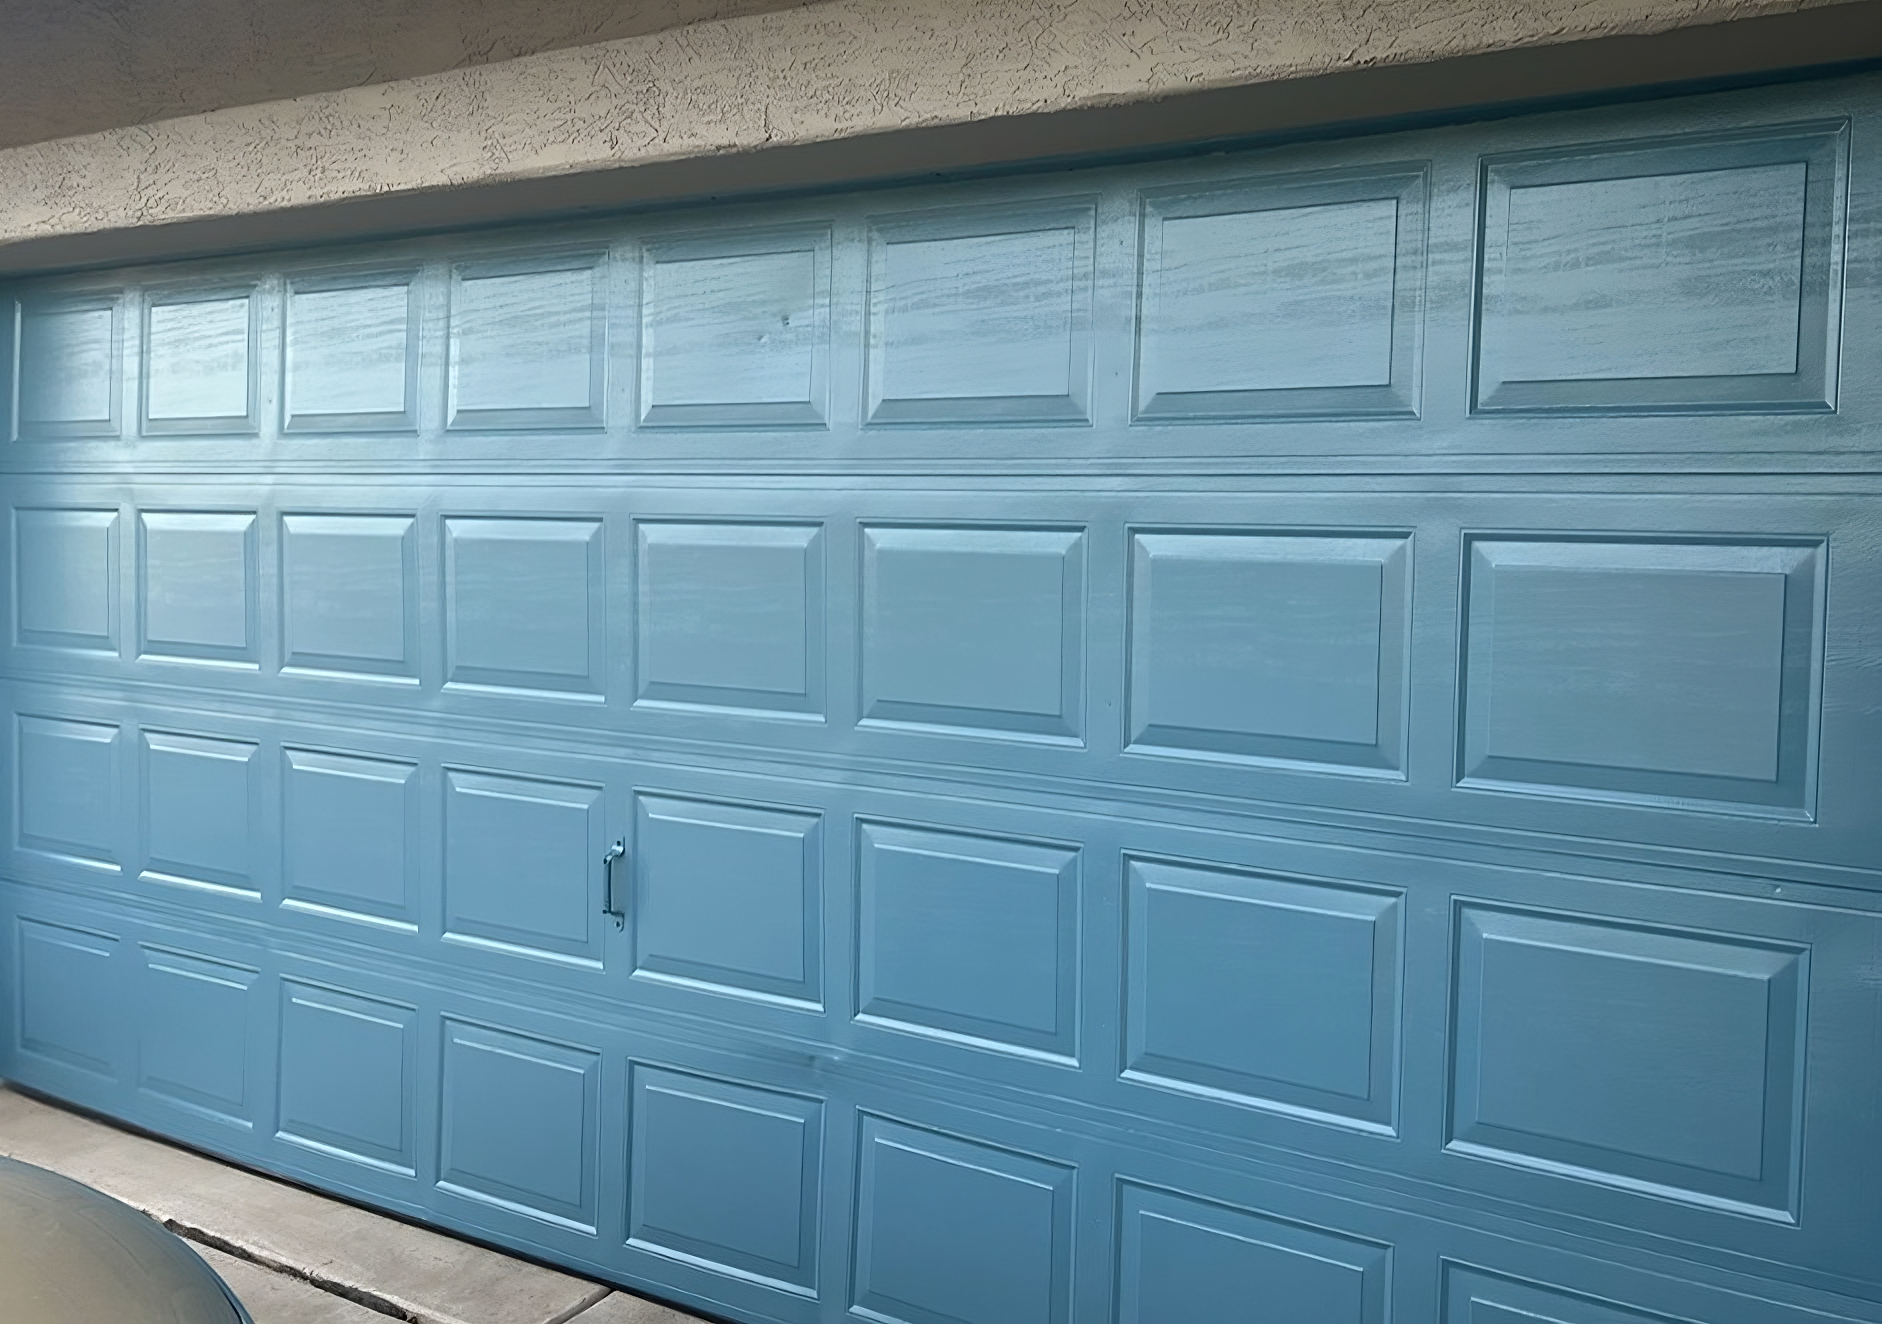 Peach Garage Door Repainted Blue After